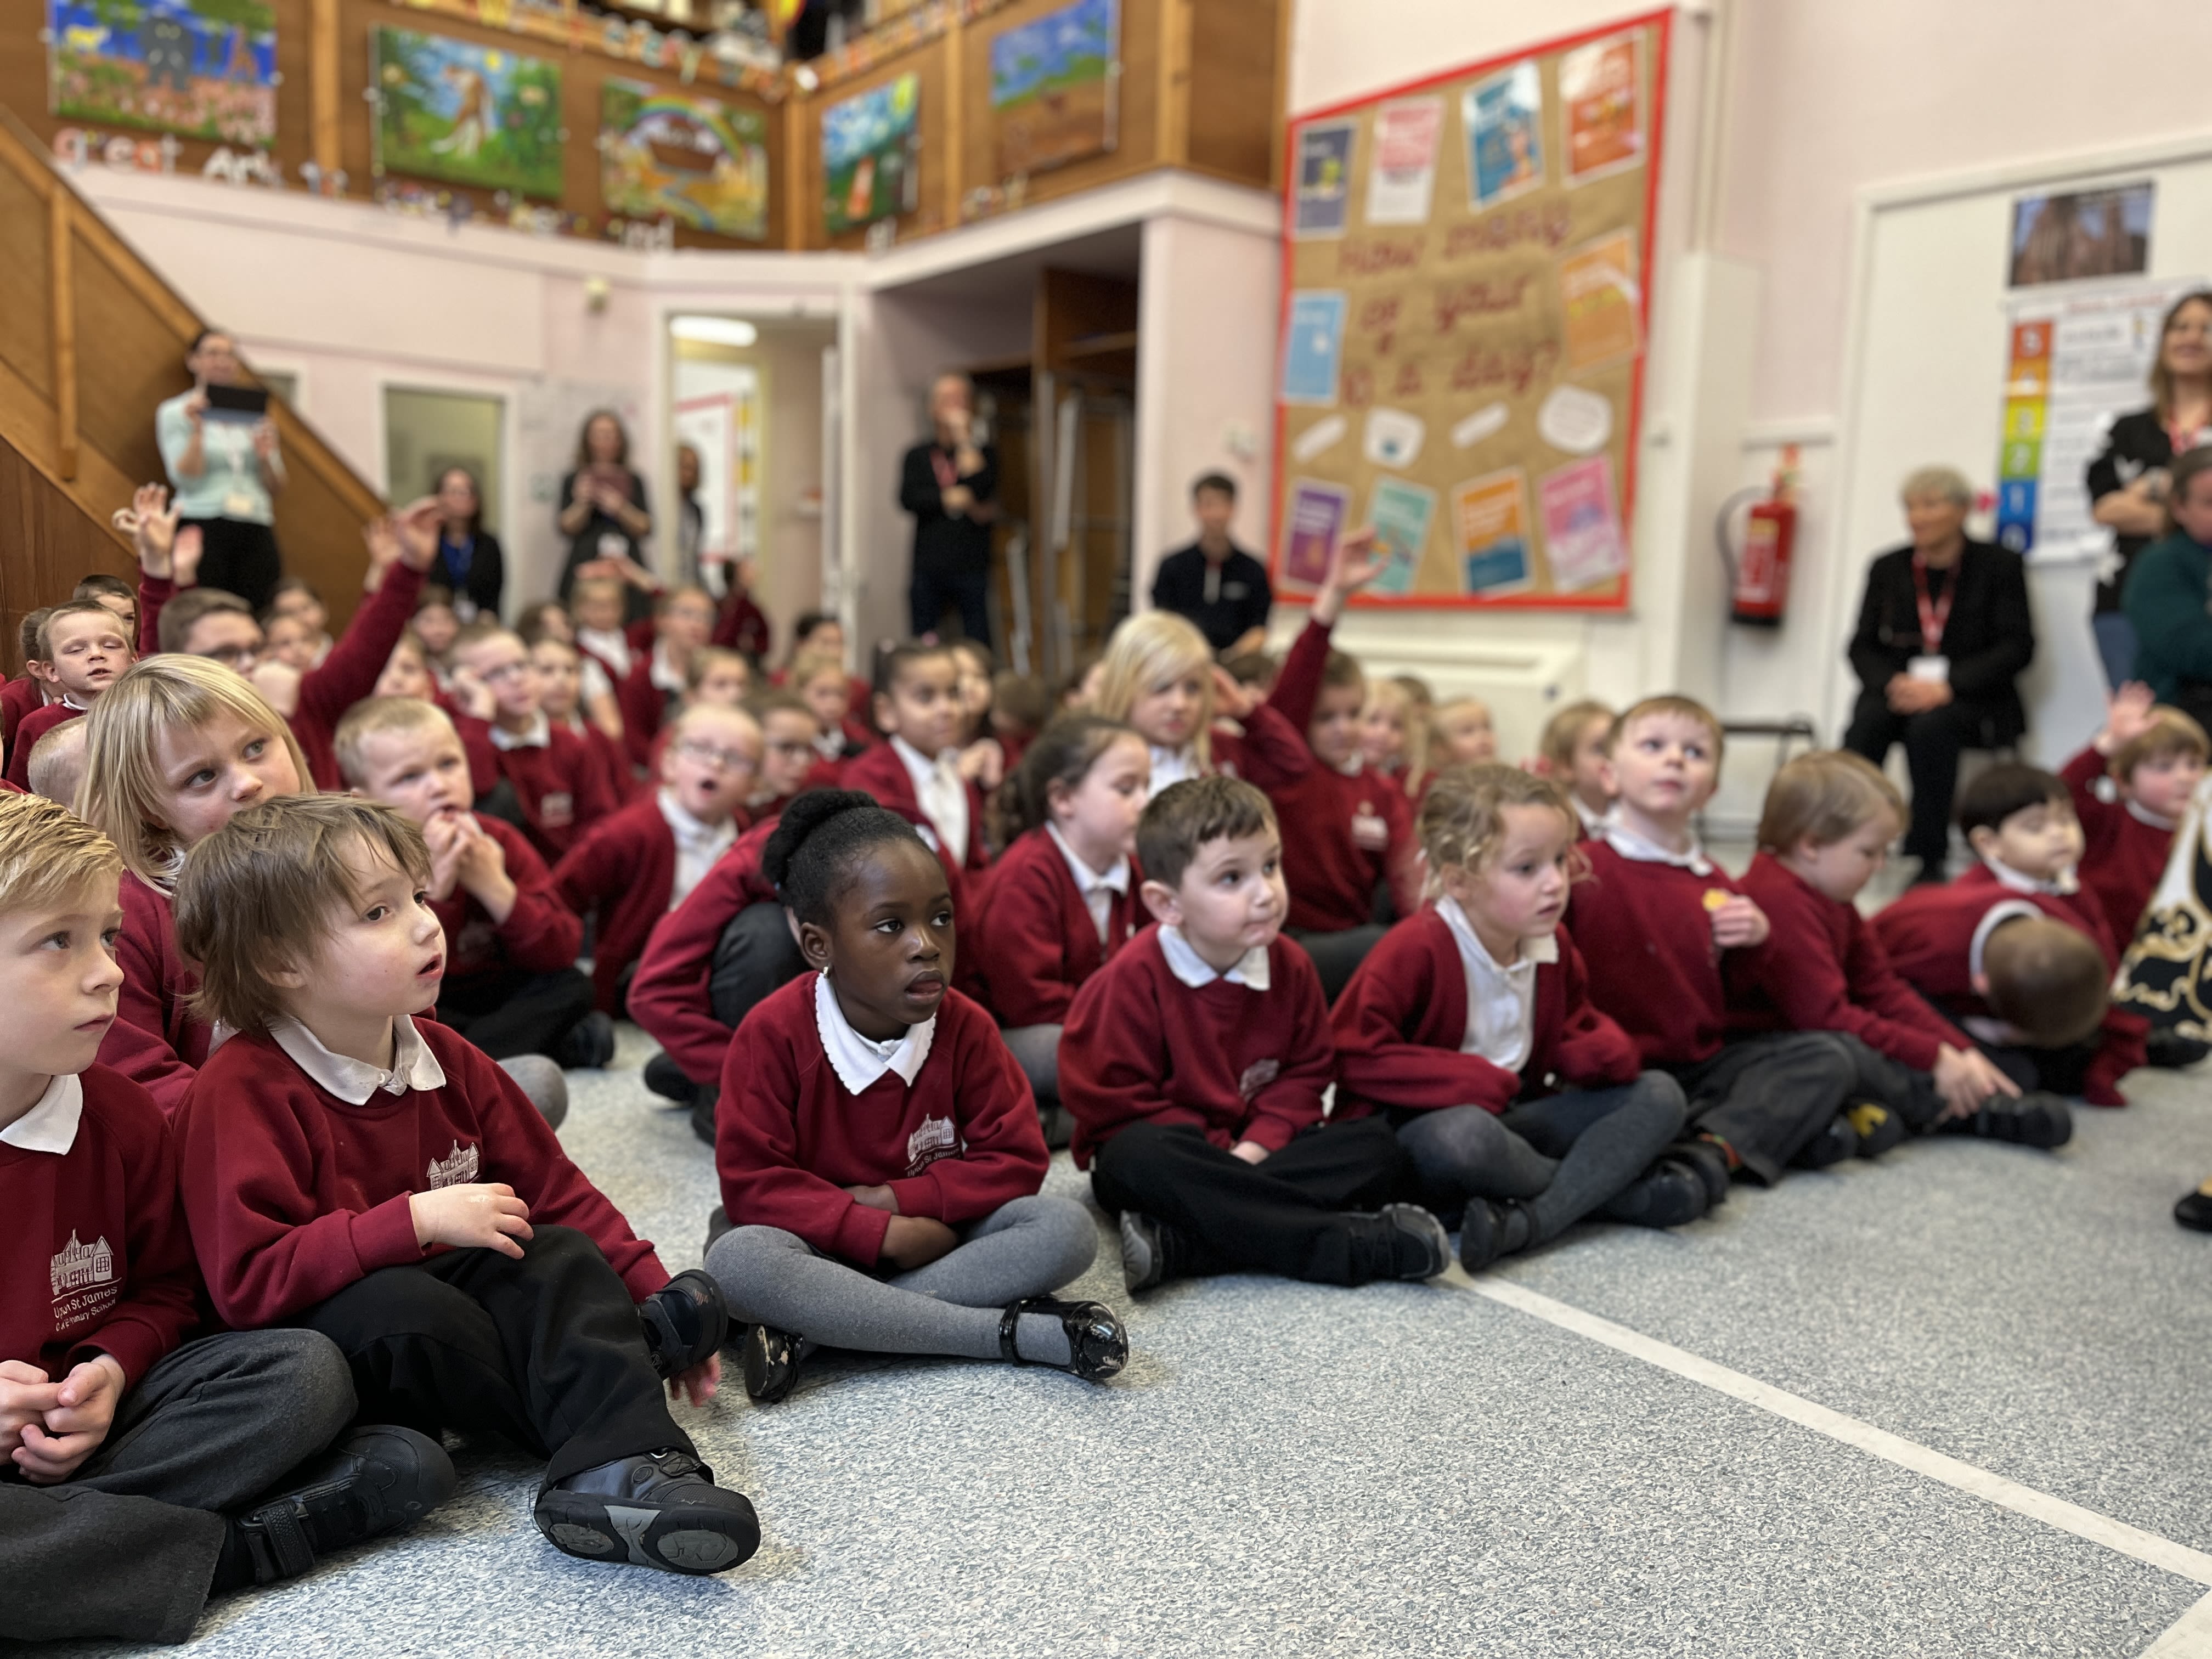 Richard Branson suprises the students of Upton St James Primary School